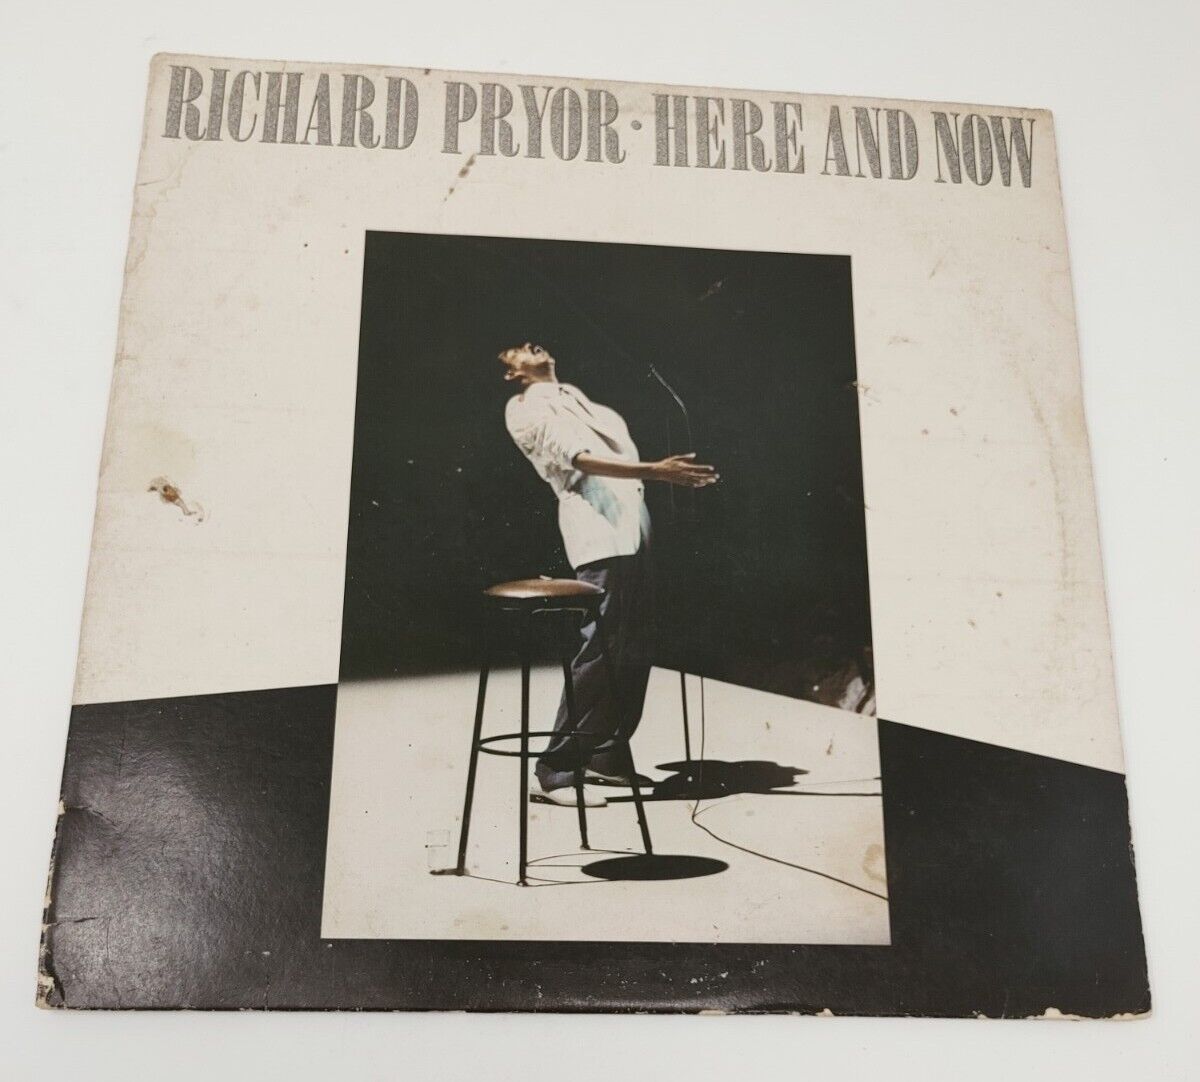 Richard Pryor- Here And Now LP vinyl 1983 Warner Bros. 1-23981 EXC